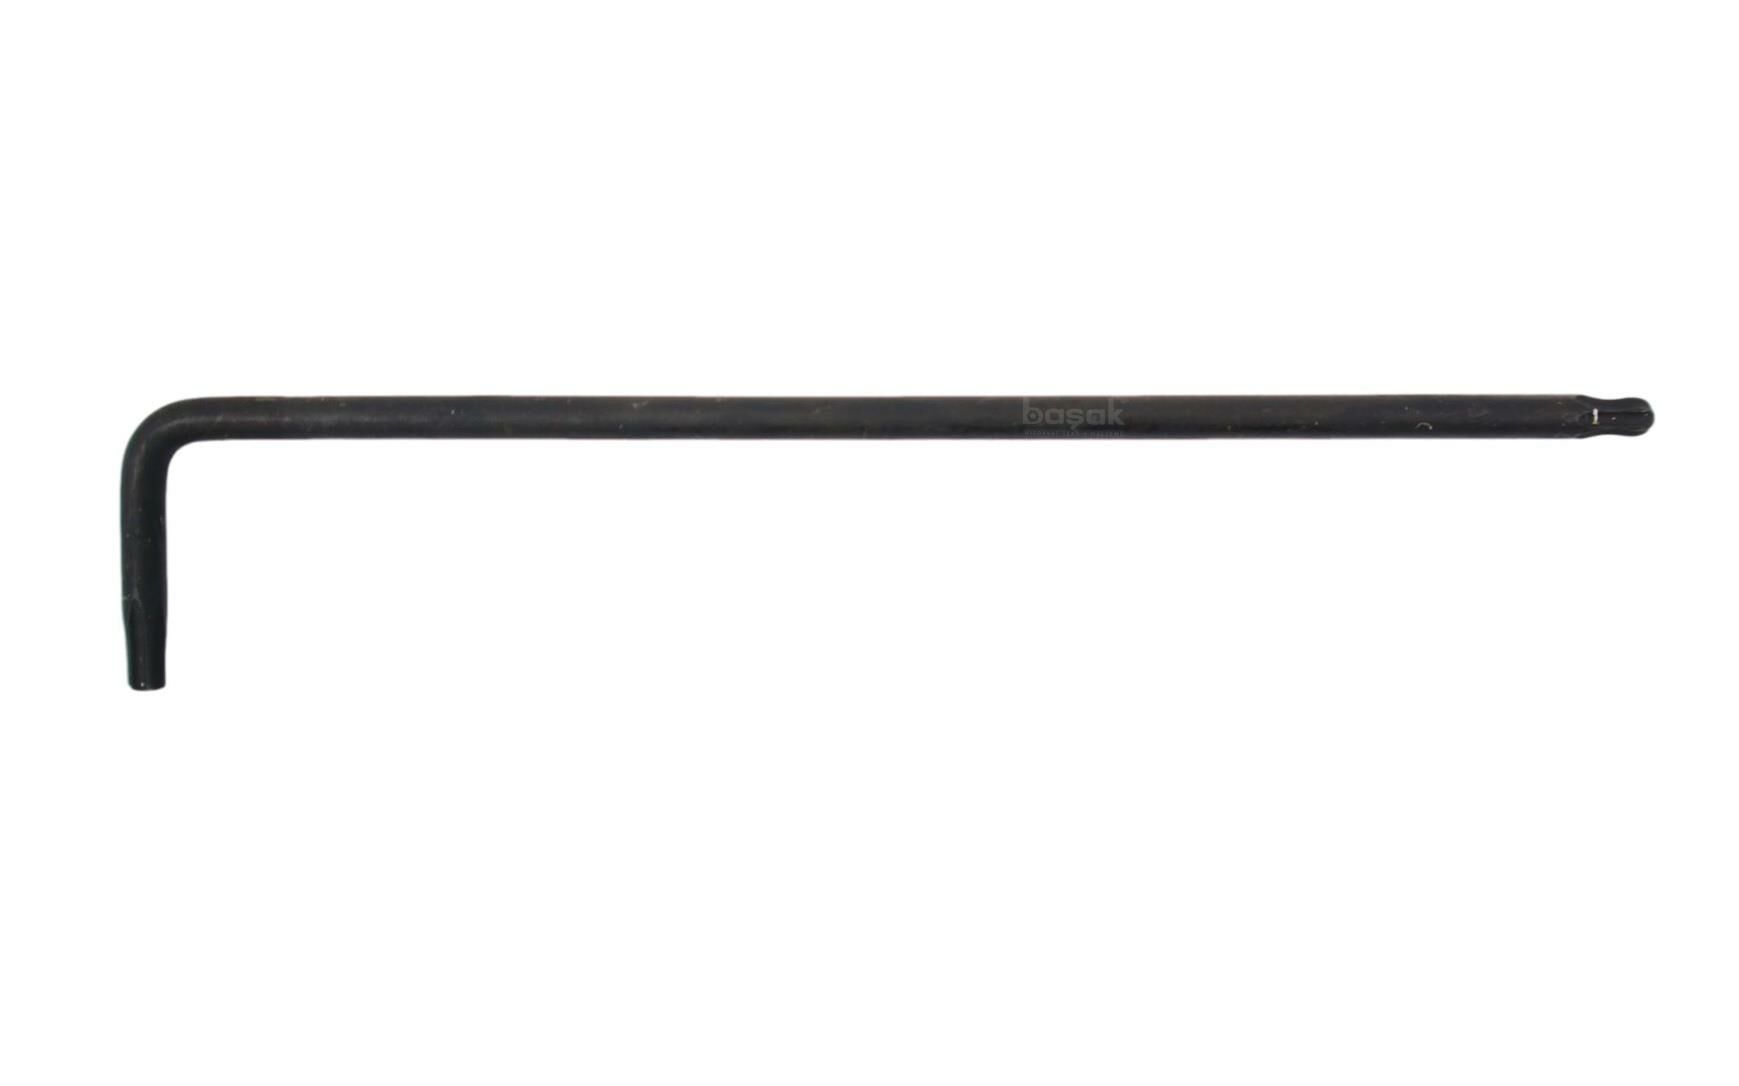 Ceta Form T10 Uzun Topbaşlı Torx Allen (Alyan) Anahtar 710B